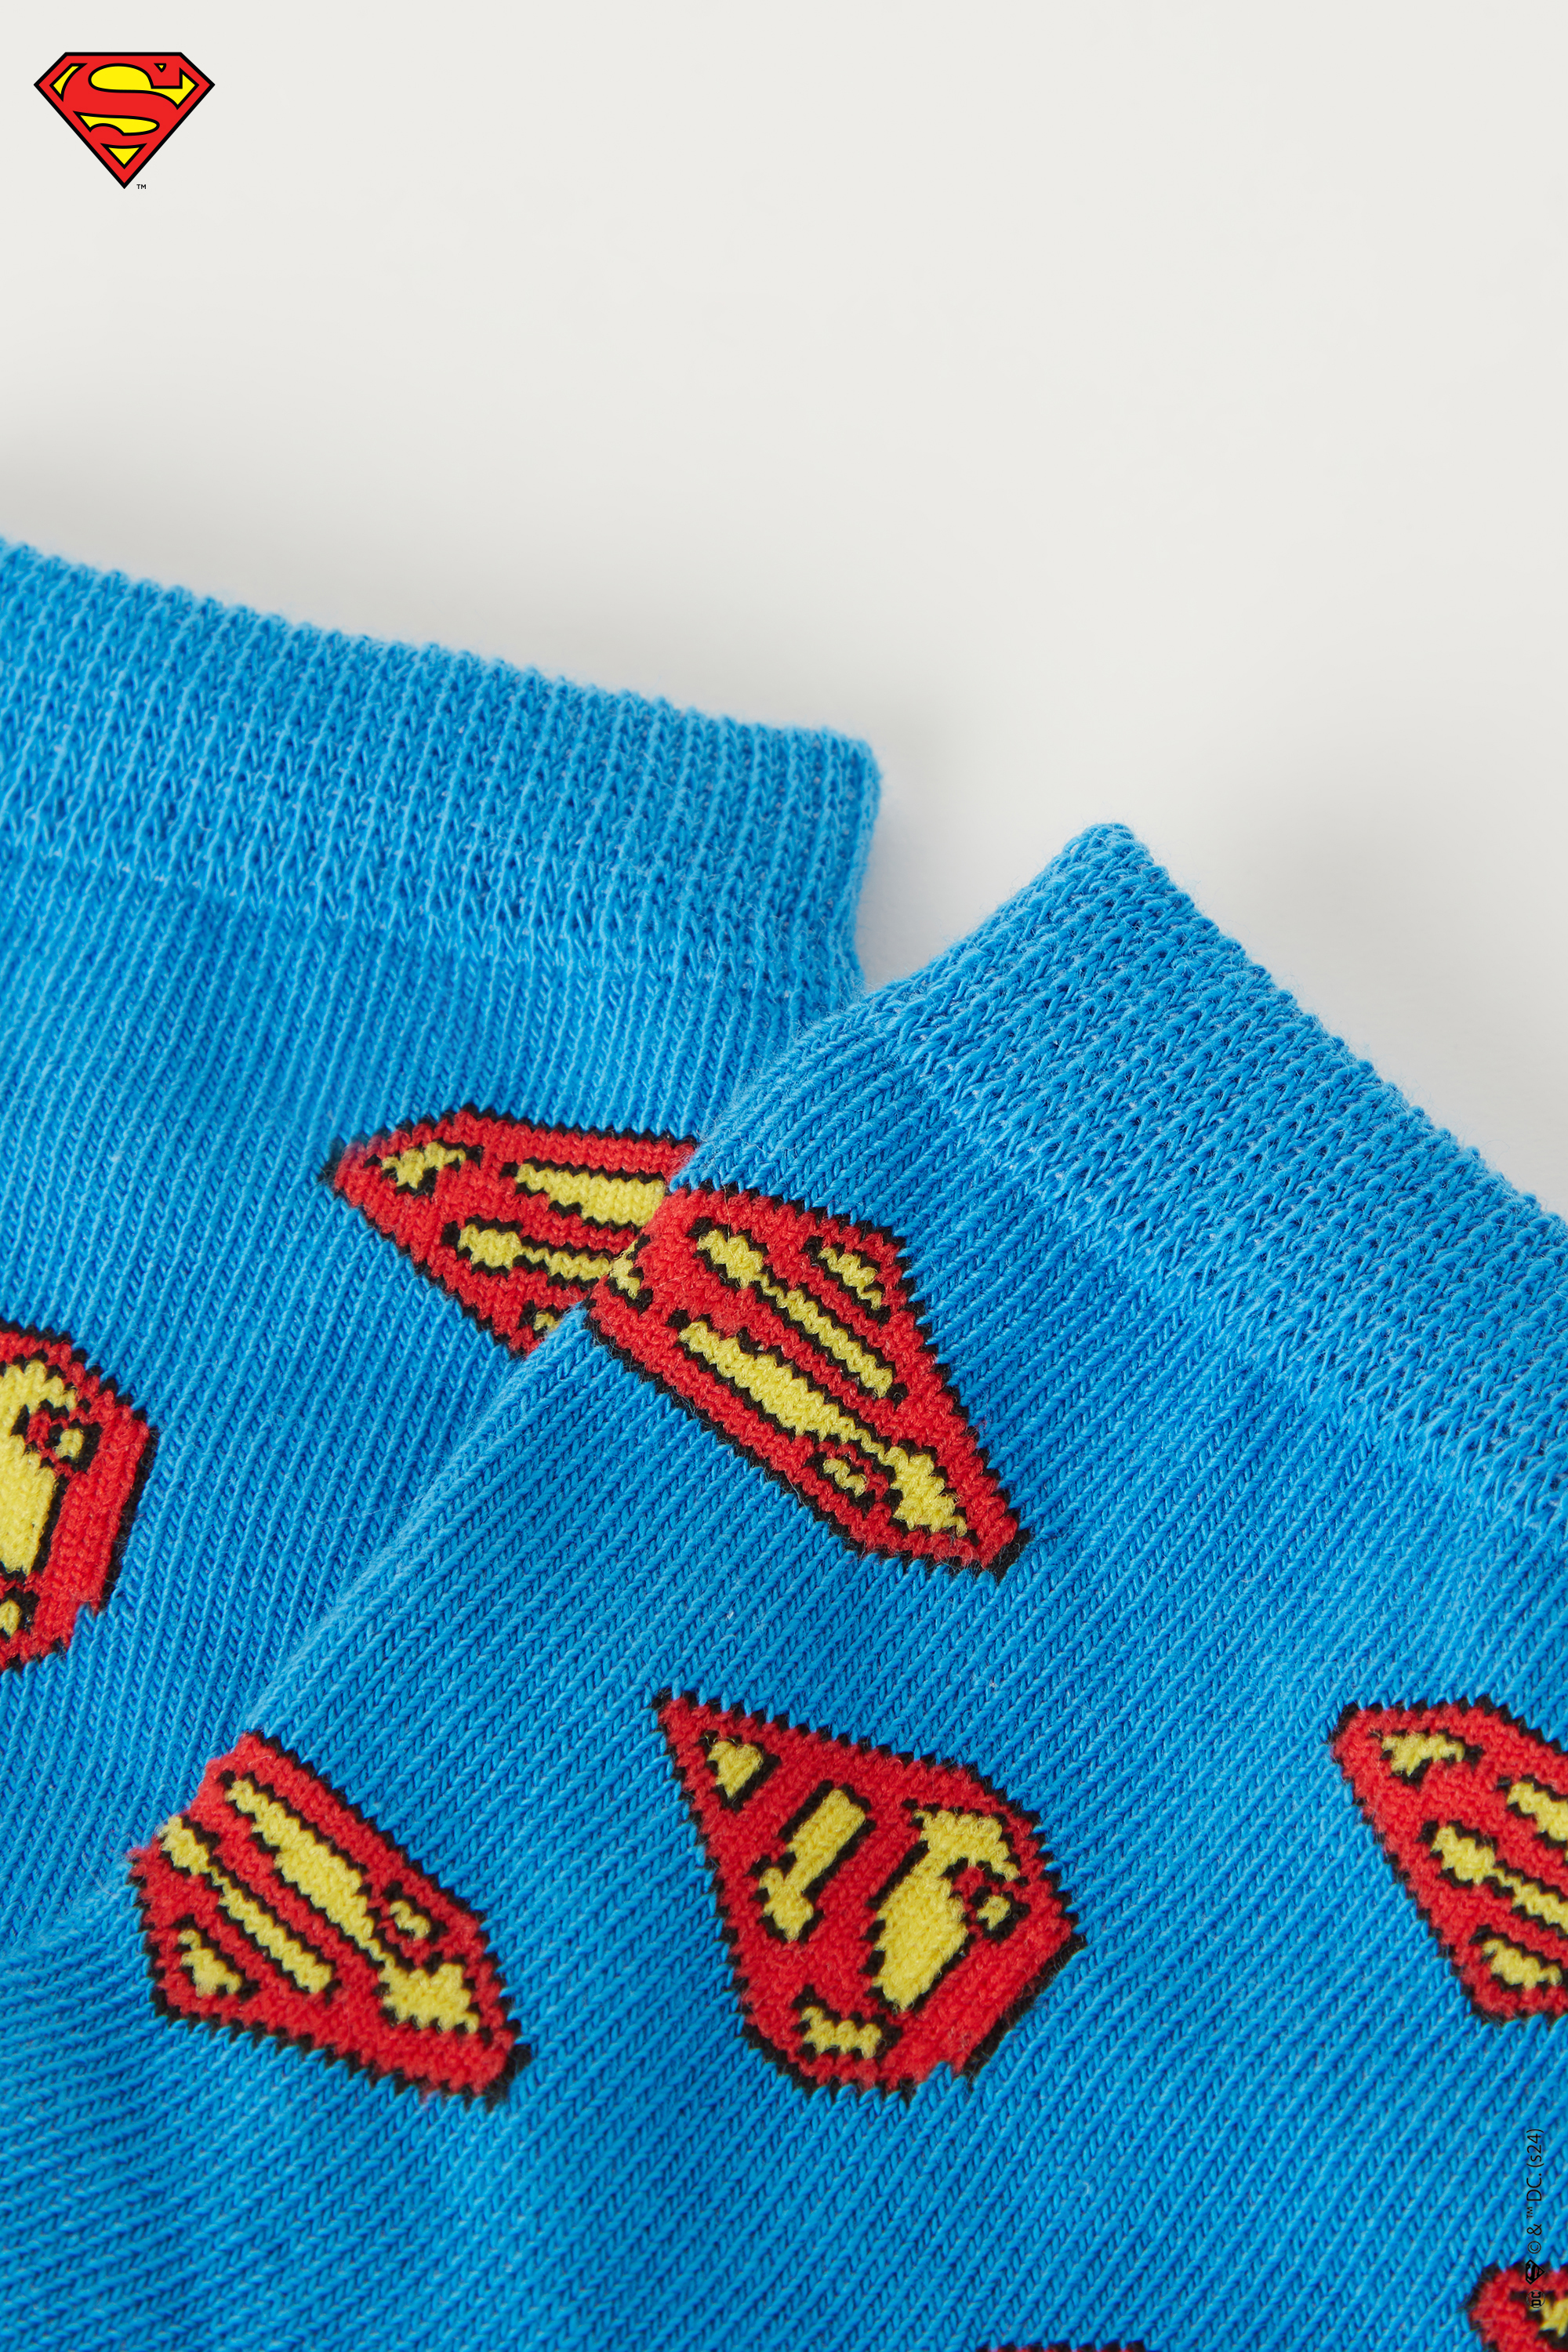 Boys’ Short Socks with Superman Print